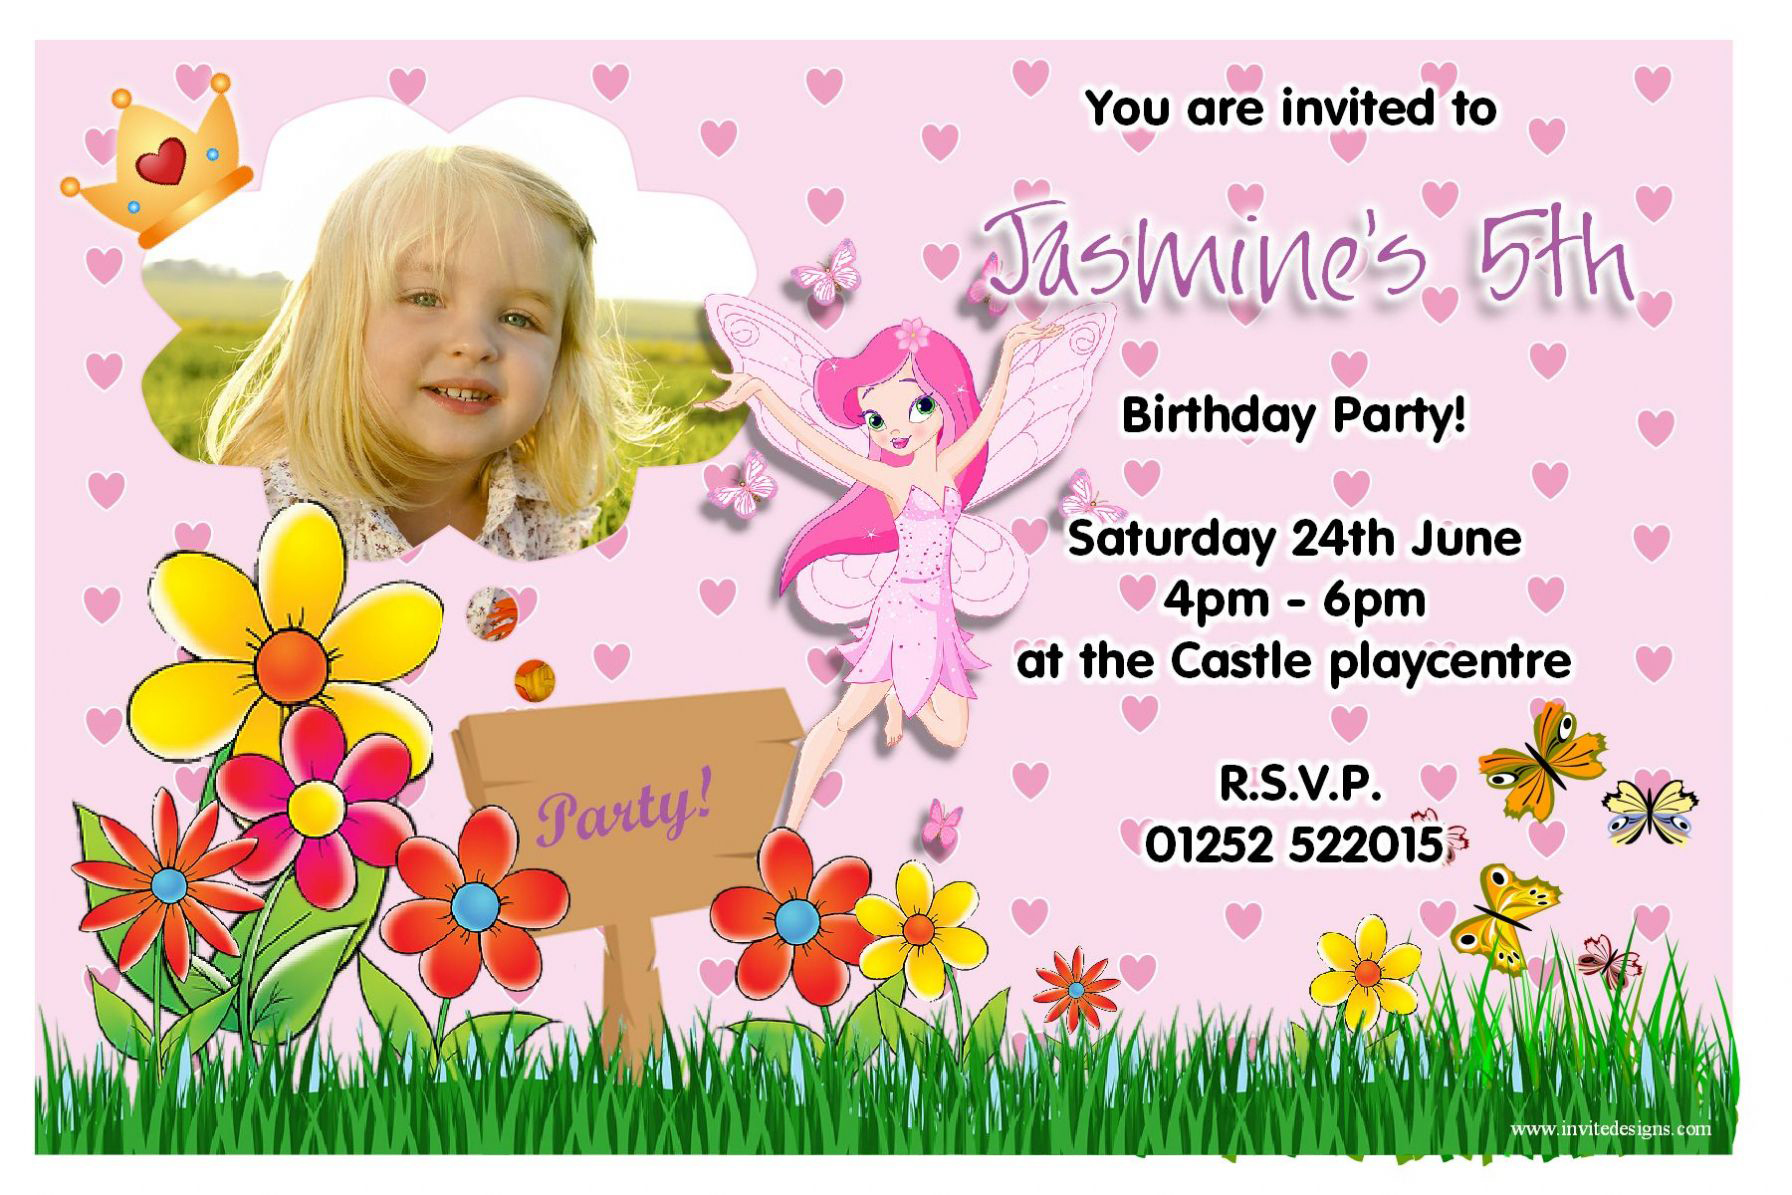 Birthday Party Invitation Etiquette